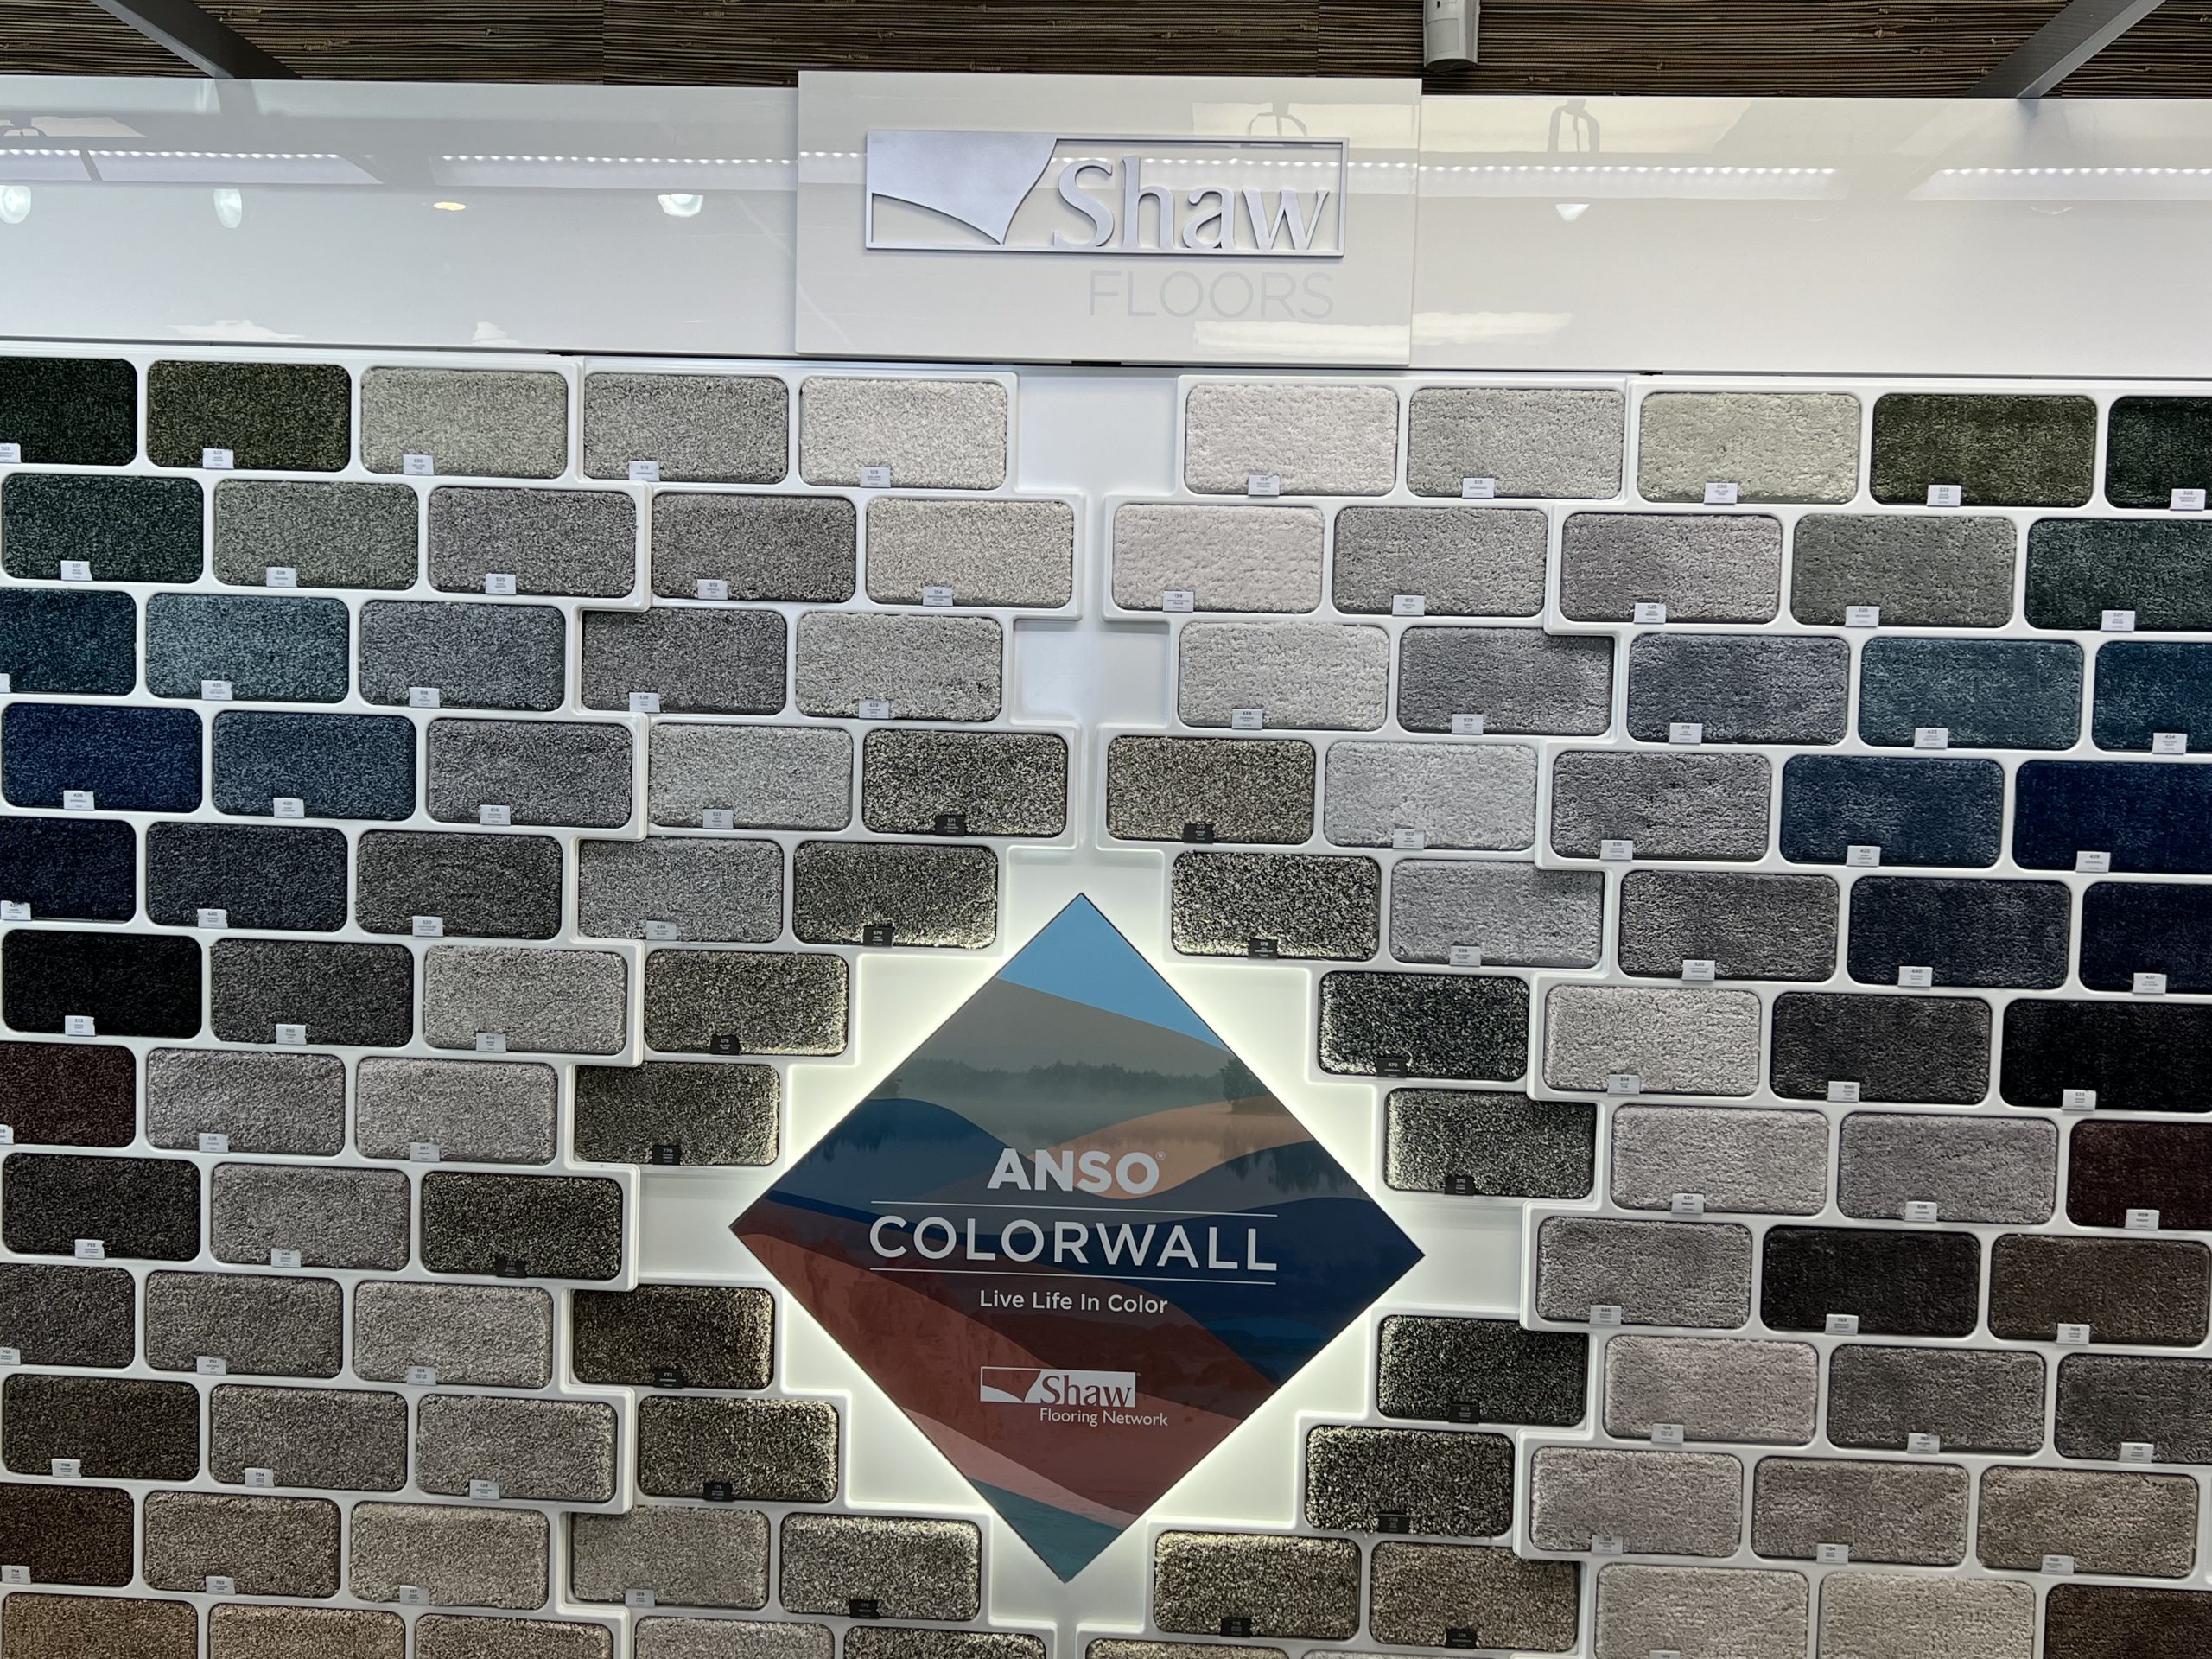 Shaw Flooring Colorwall